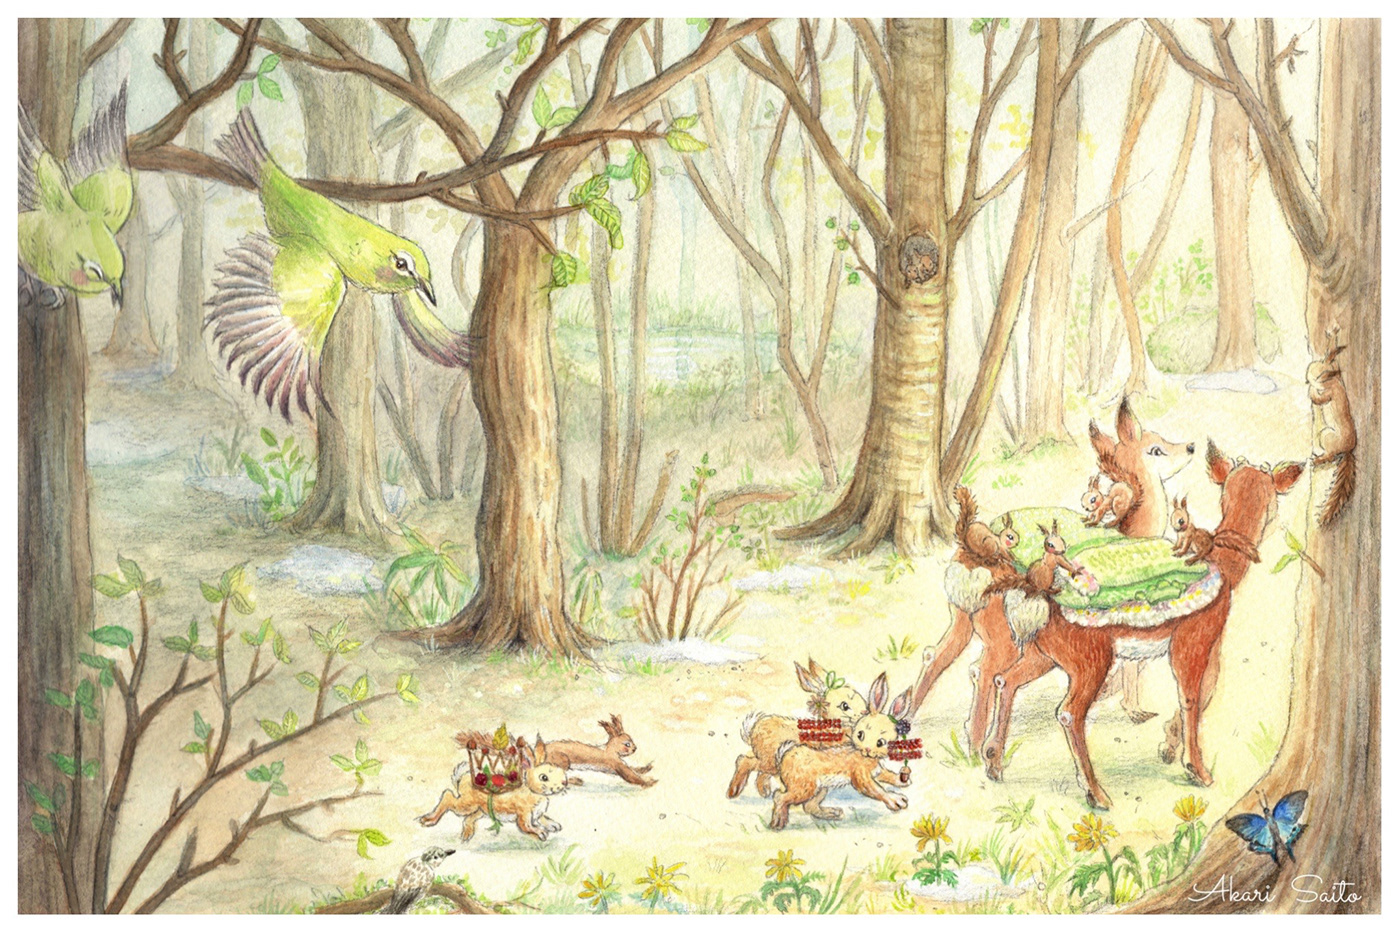 ILLUSTRATION  forest animals animals illustration rabbit watercolor forest illustration childrens illustration märchen animal